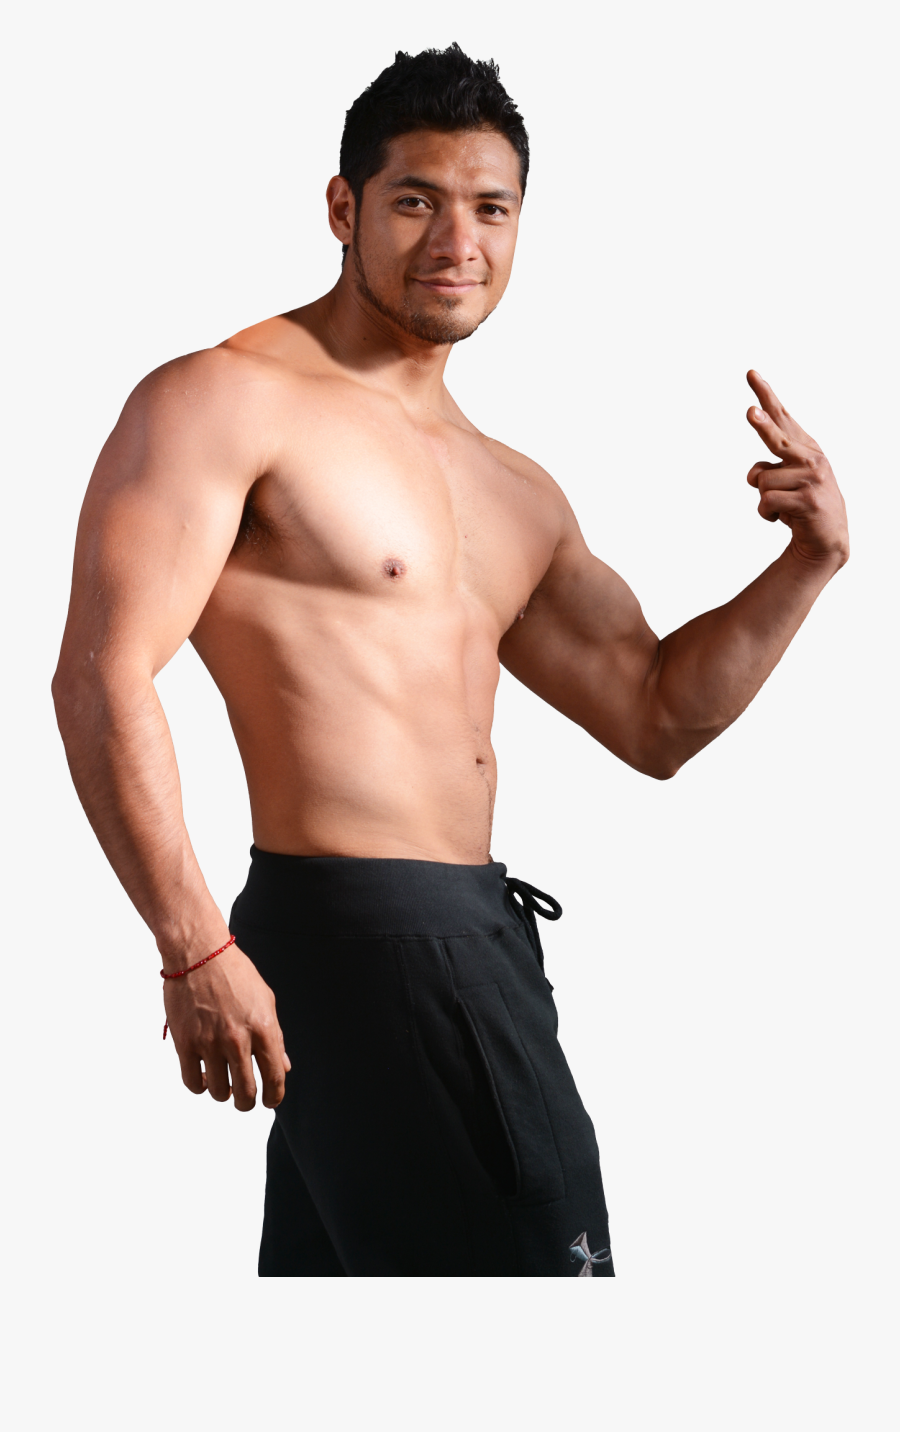 Fitness Png Images Pngpix - Men Fitness Png, Transparent Clipart